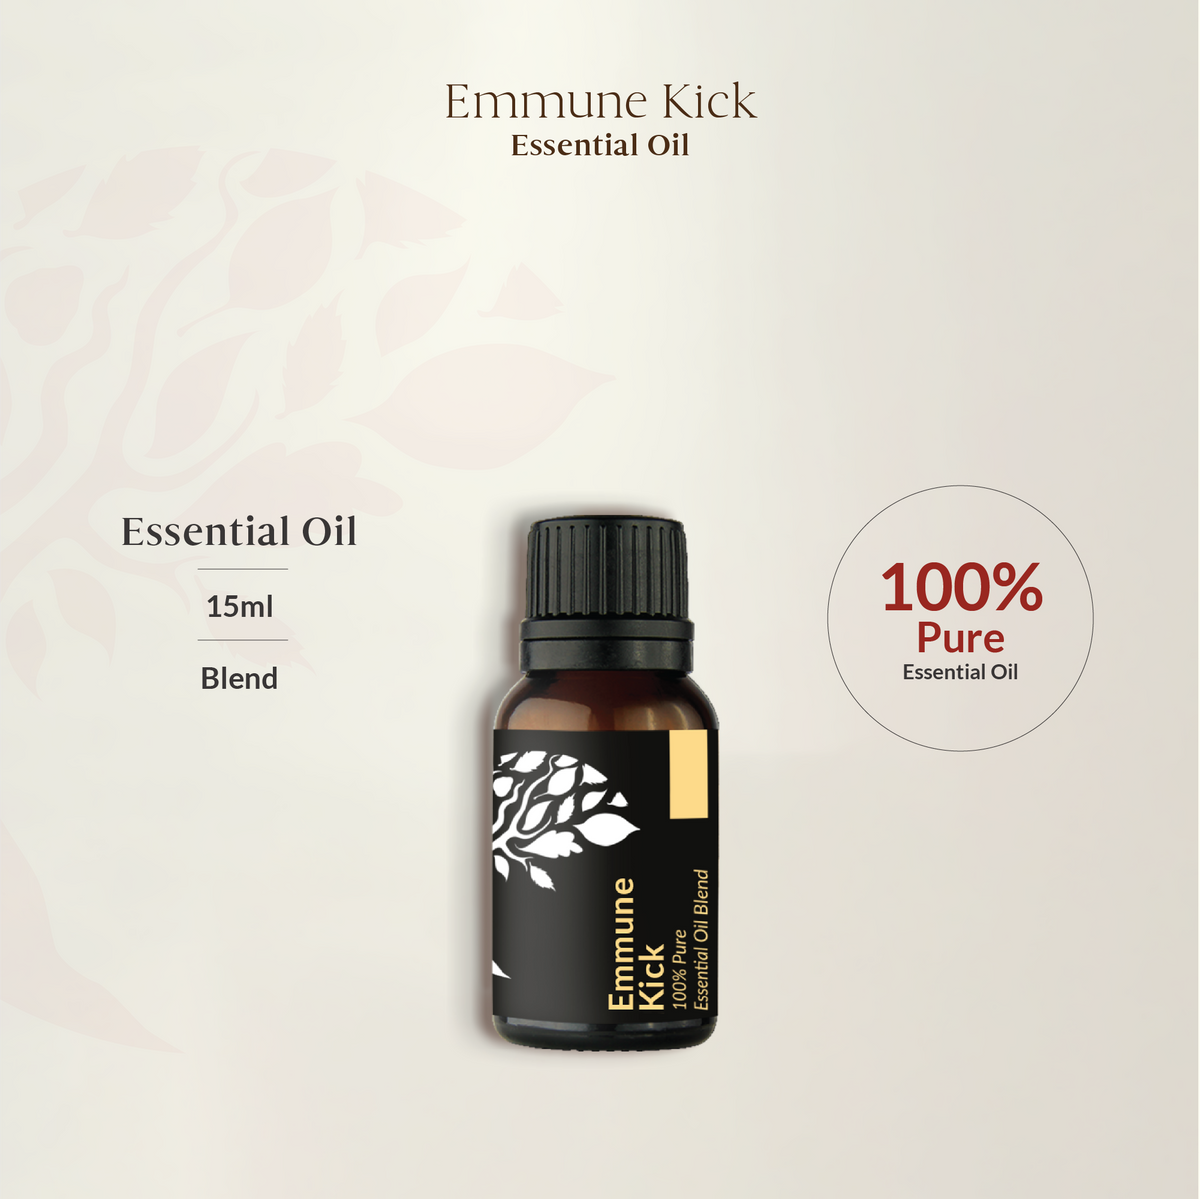 Emmune Kick Essential Oil Blend 15ml